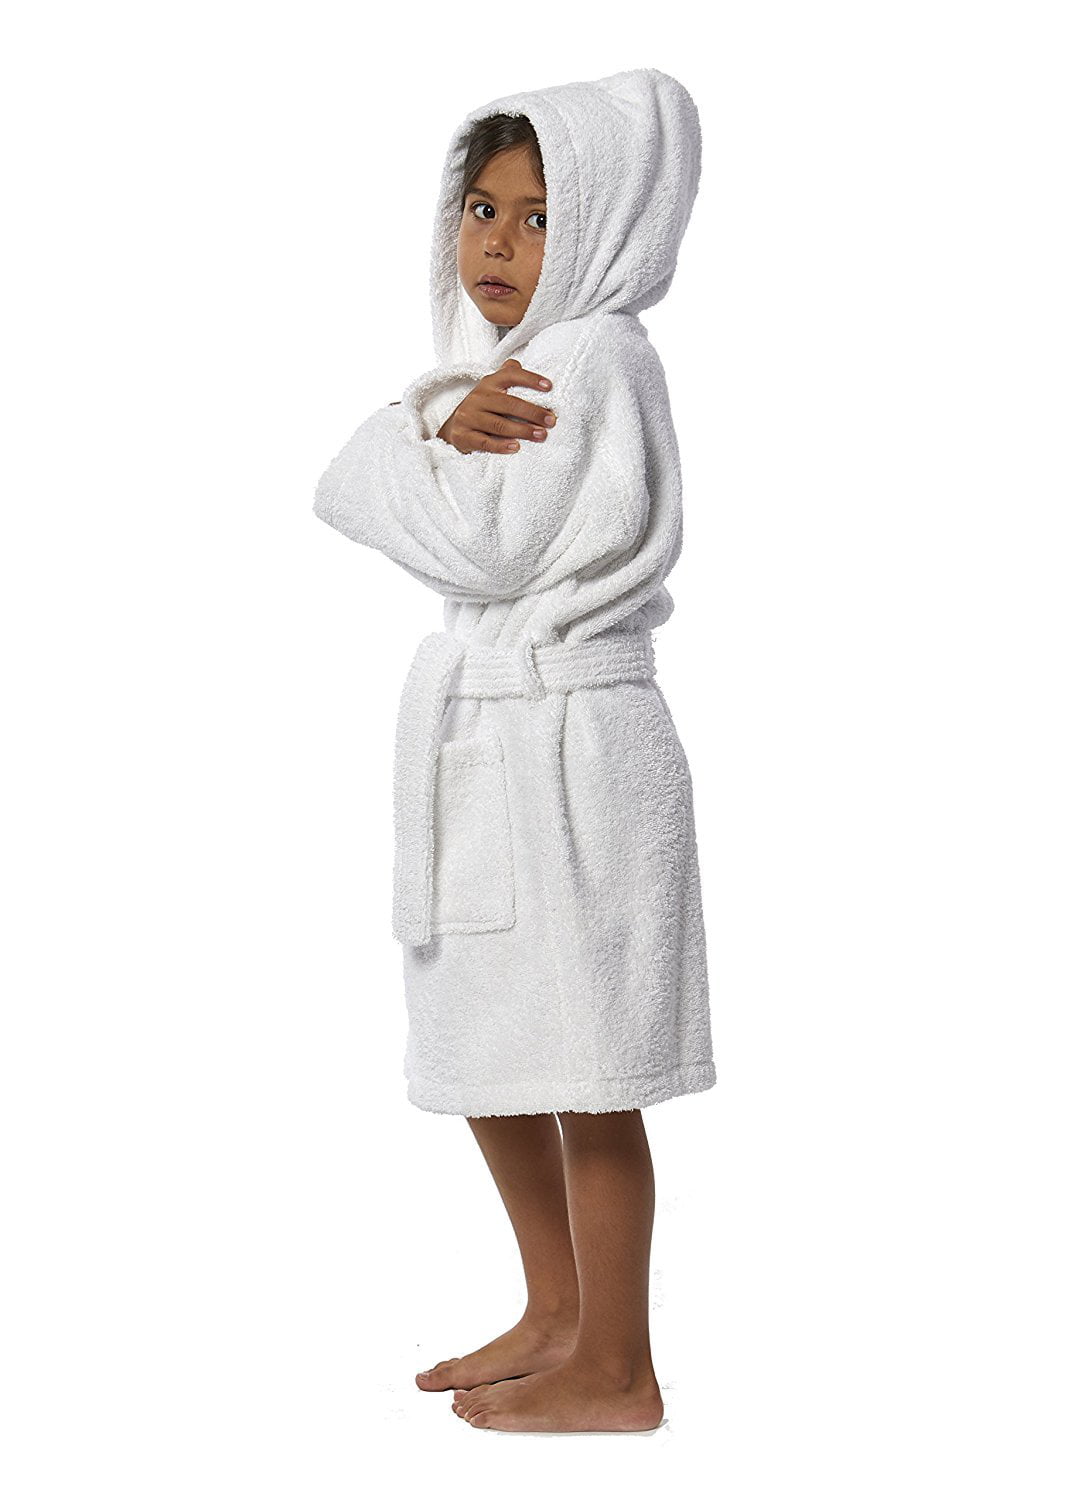 100% Cotton! CHILDREN'S BATHROBE TOWELS FOR GIRLS PRINCESS DESIGNS 